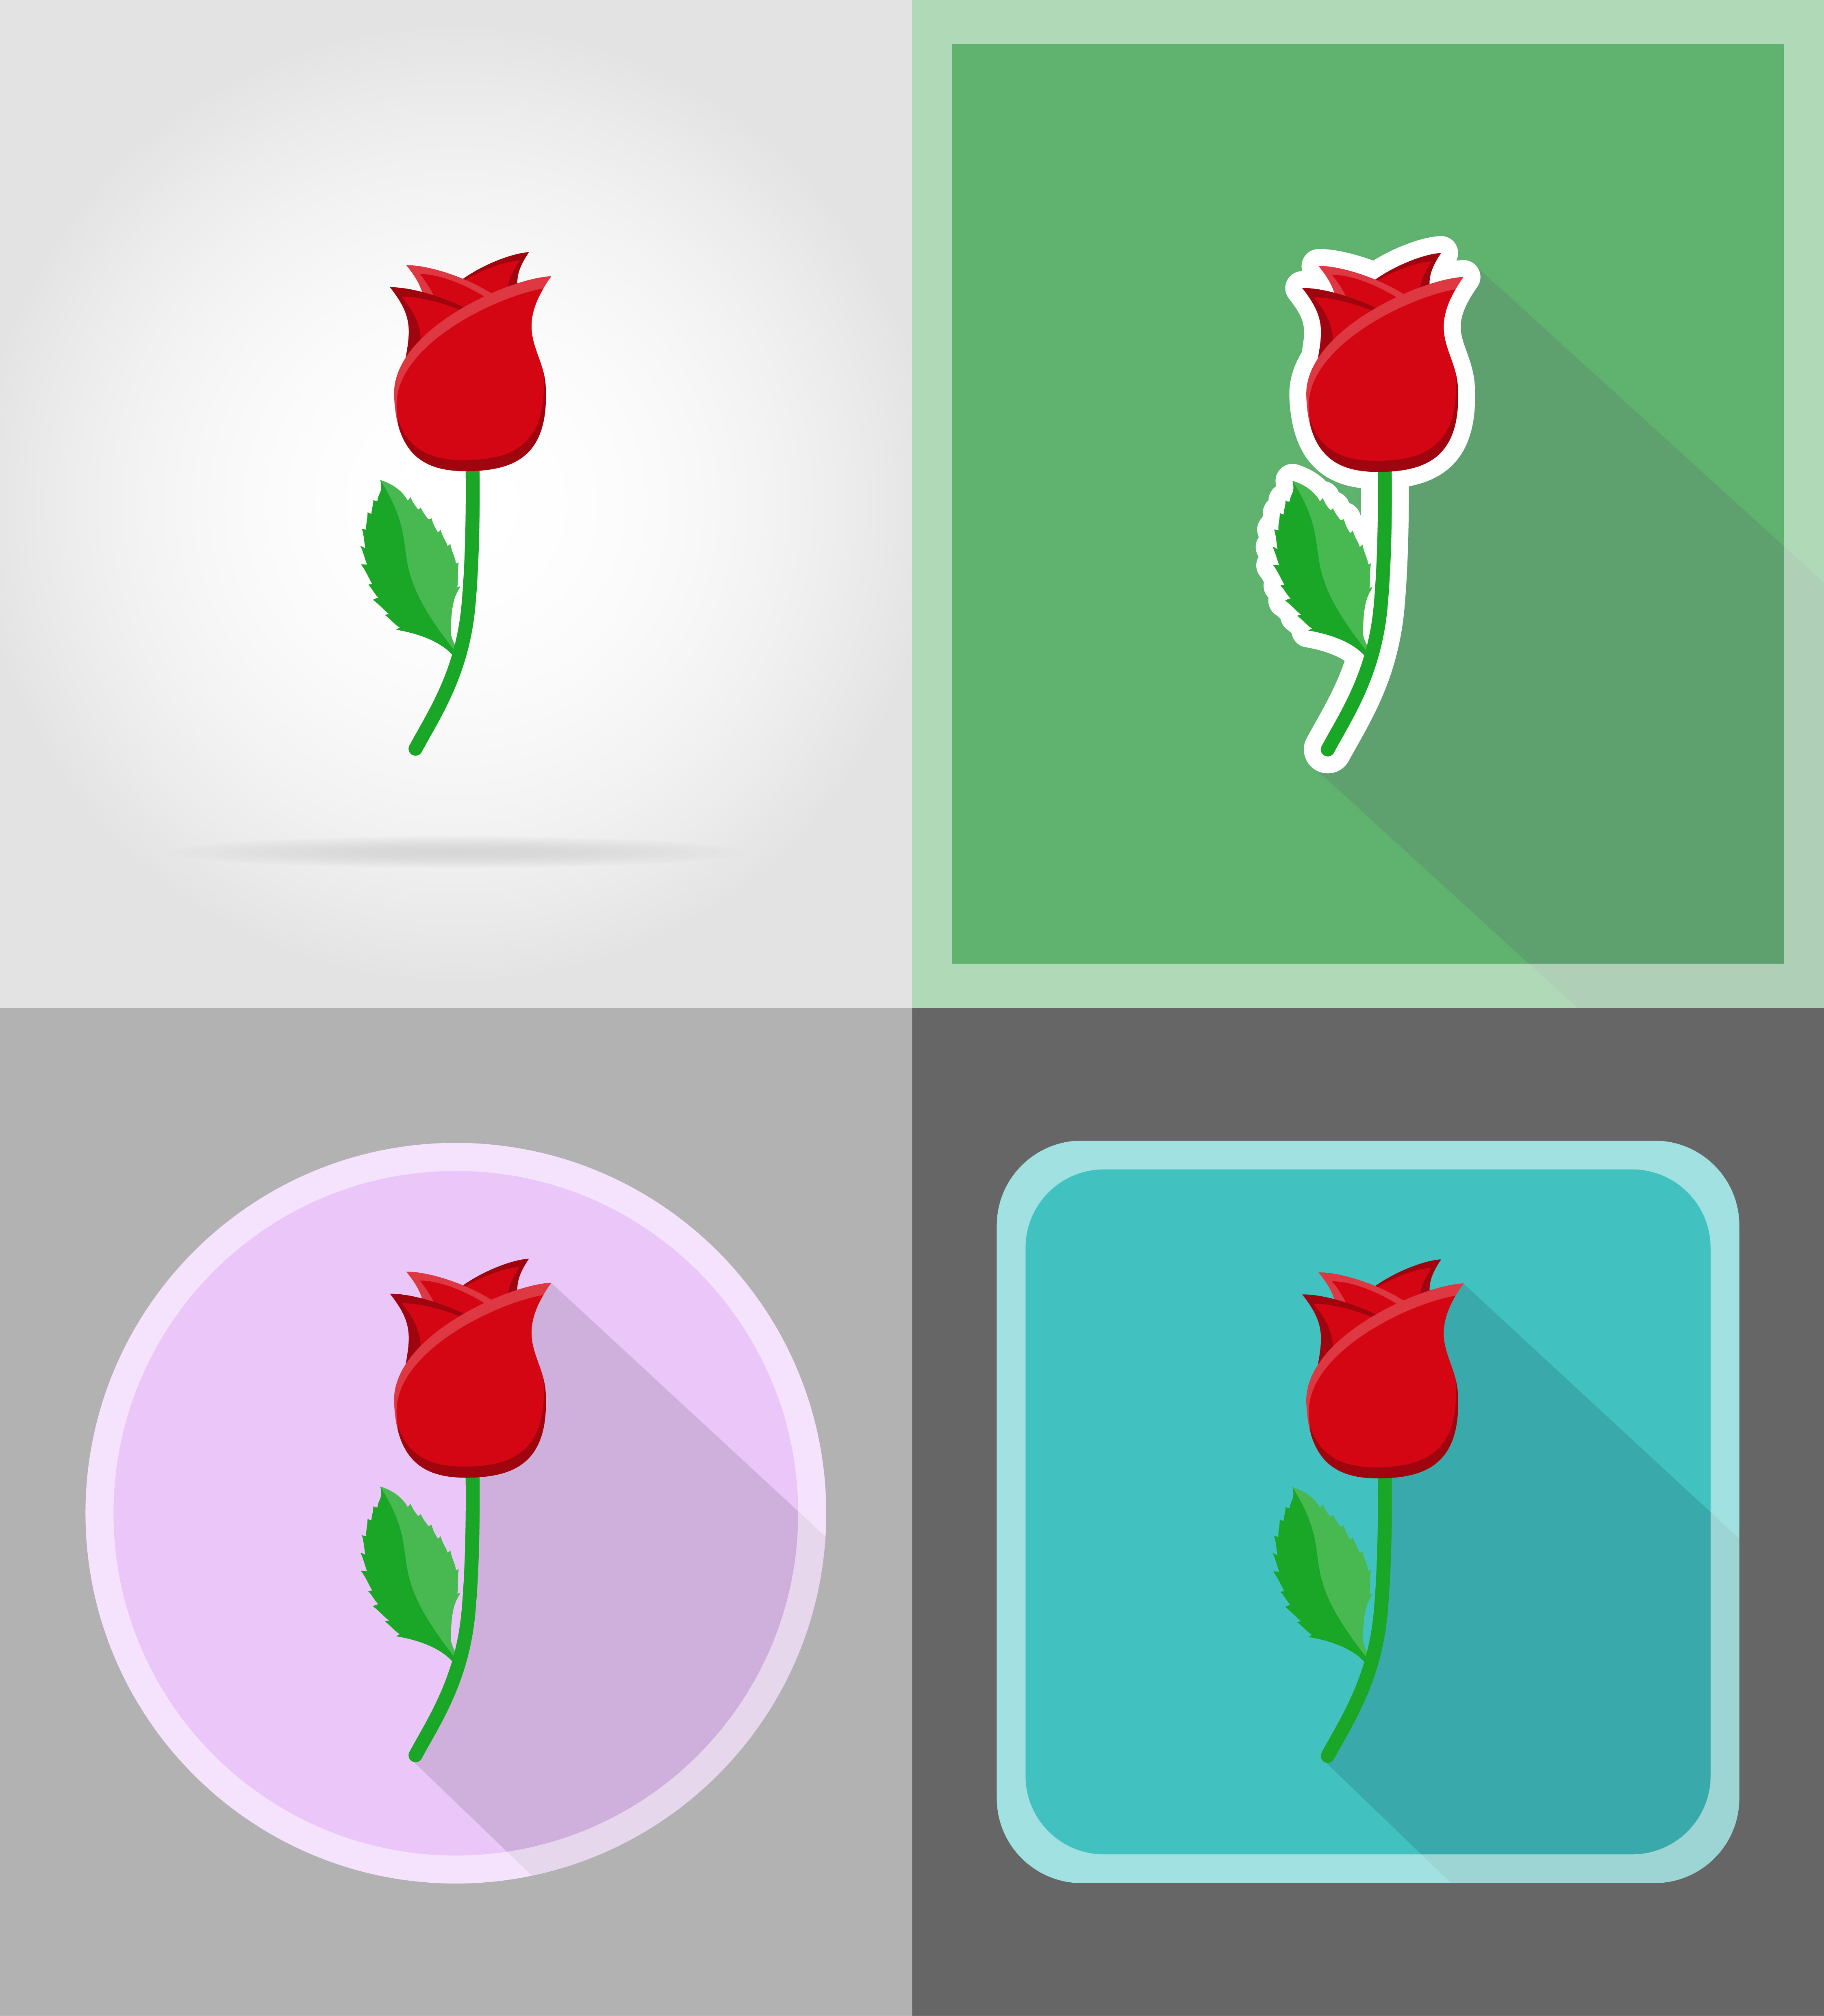 Download flower flat icons vector illustration 488631 - Download Free Vectors, Clipart Graphics & Vector Art